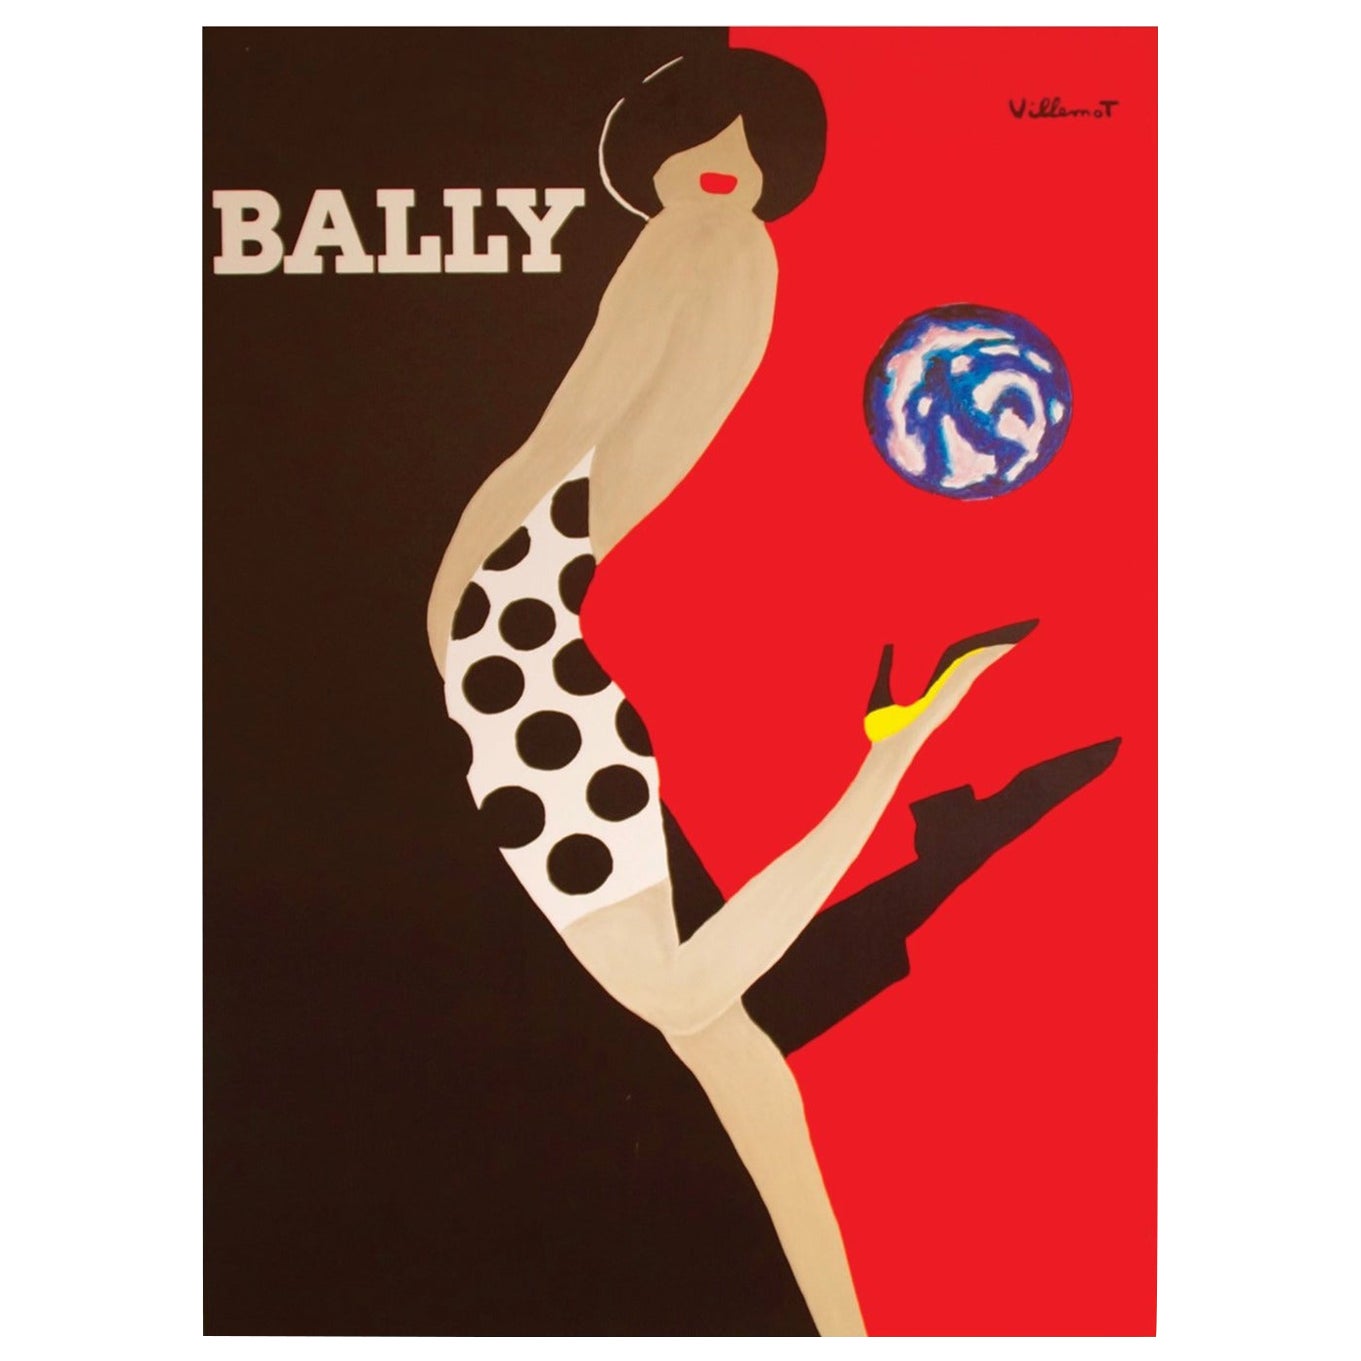 1979 Bally Kick Original Vintage Poster For Sale